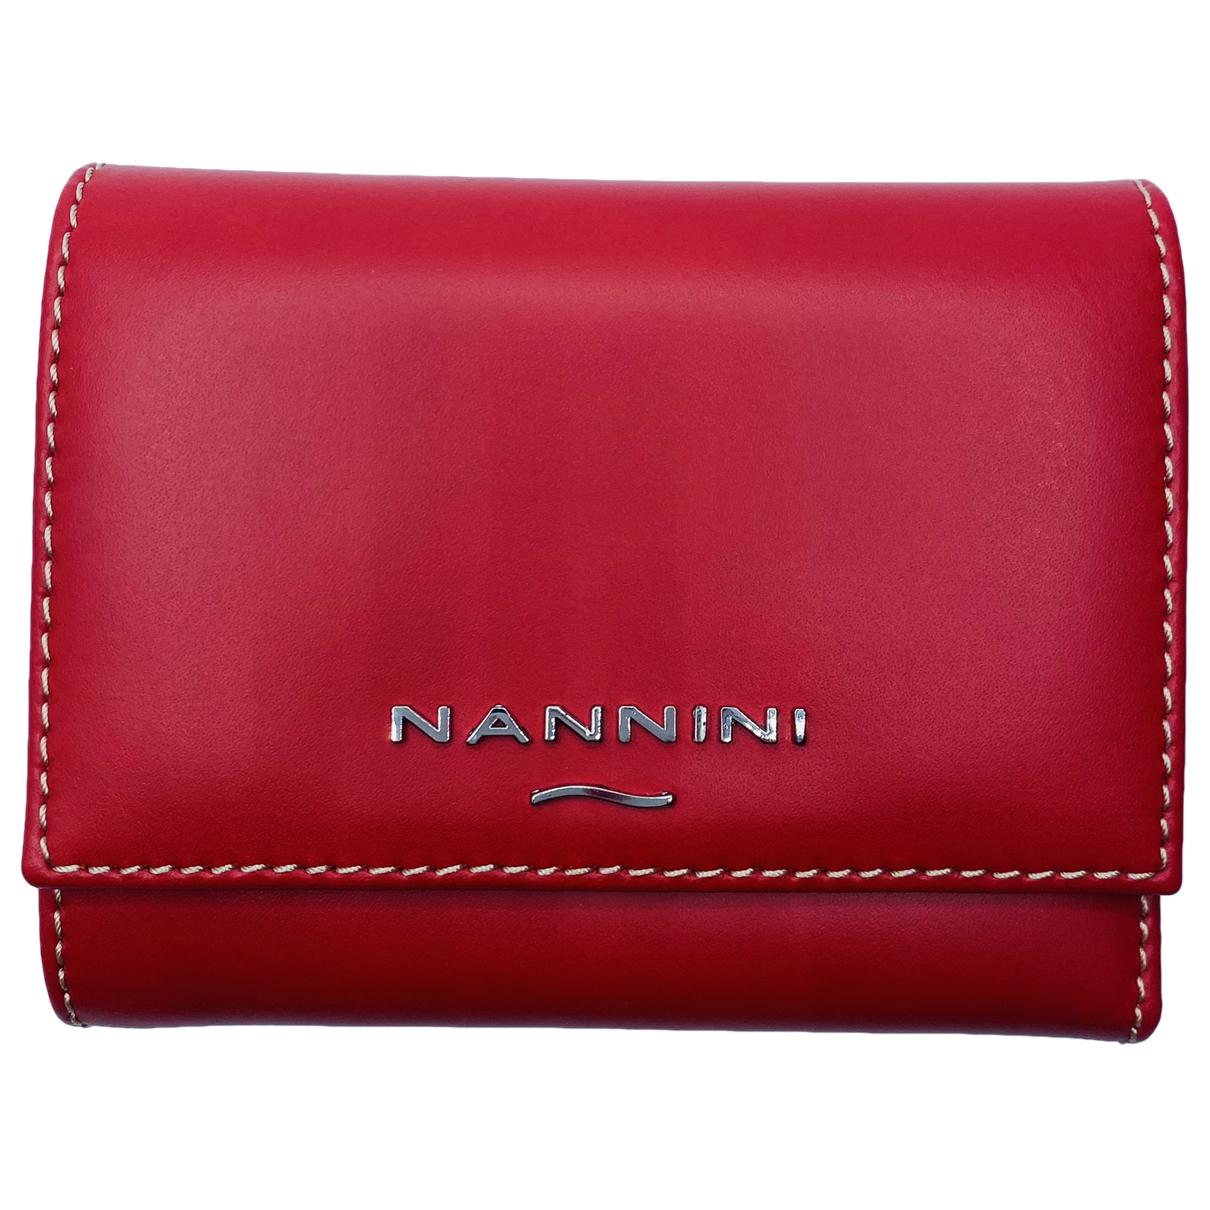 Leather wallet NANNINI